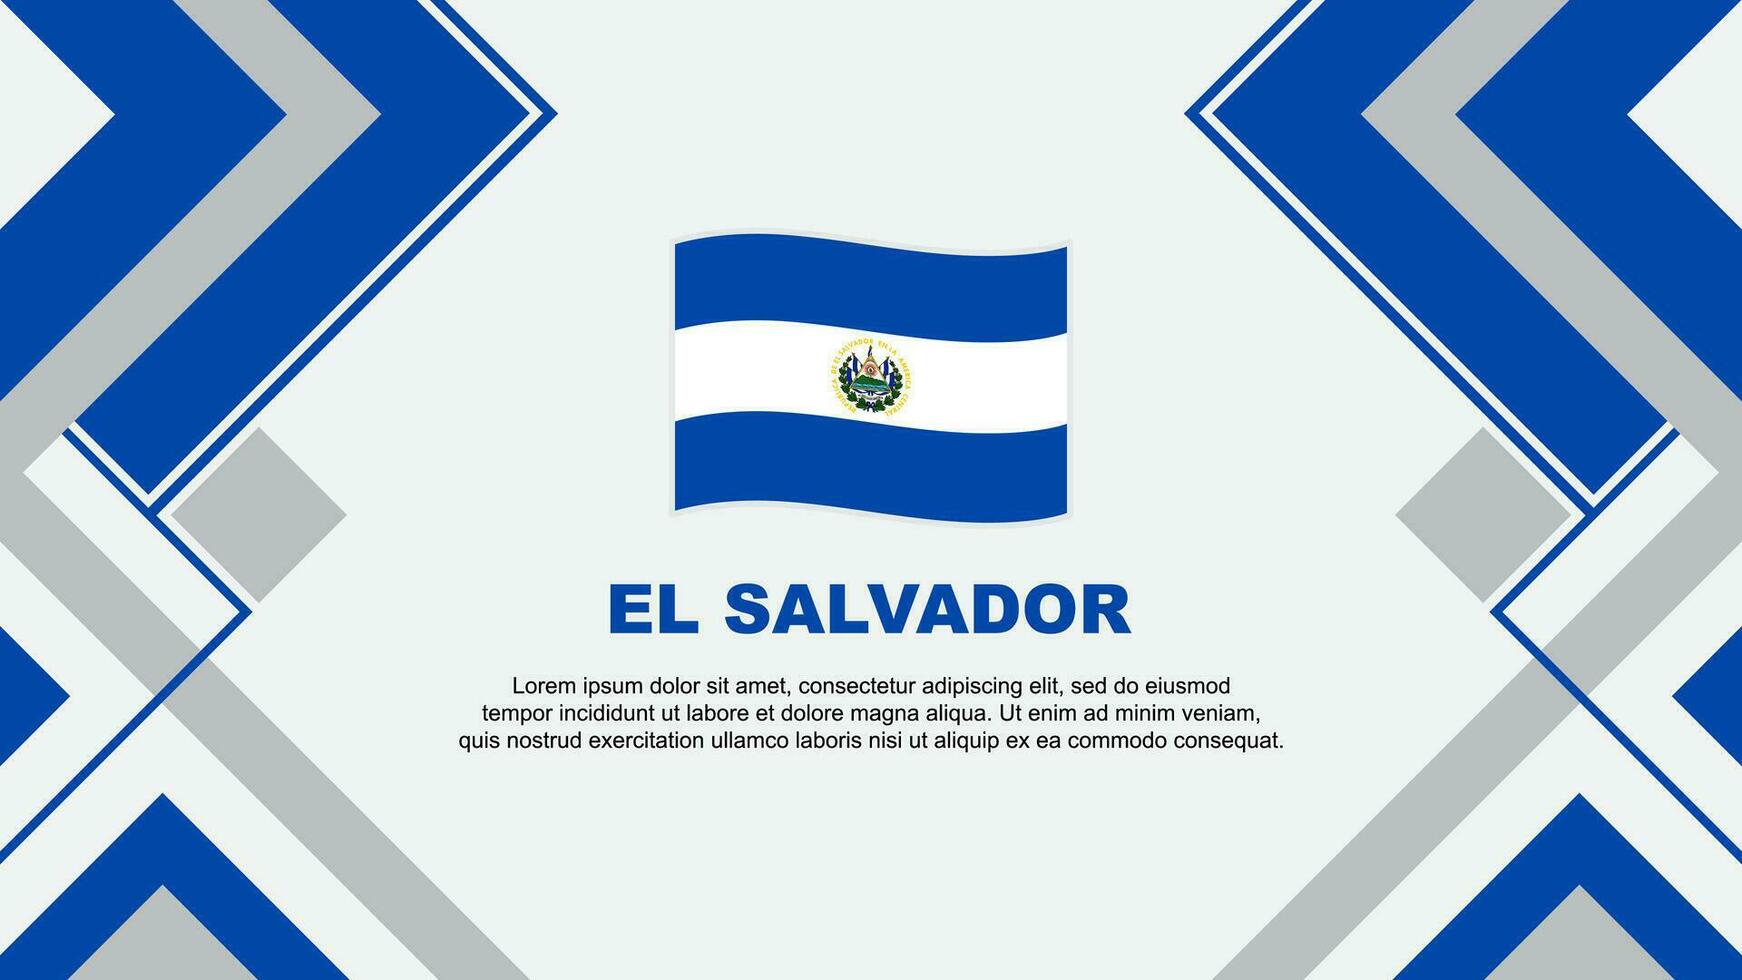 El Salvador Flag Abstract Background Design Template. El Salvador Independence Day Banner Wallpaper Vector Illustration. El Salvador Banner